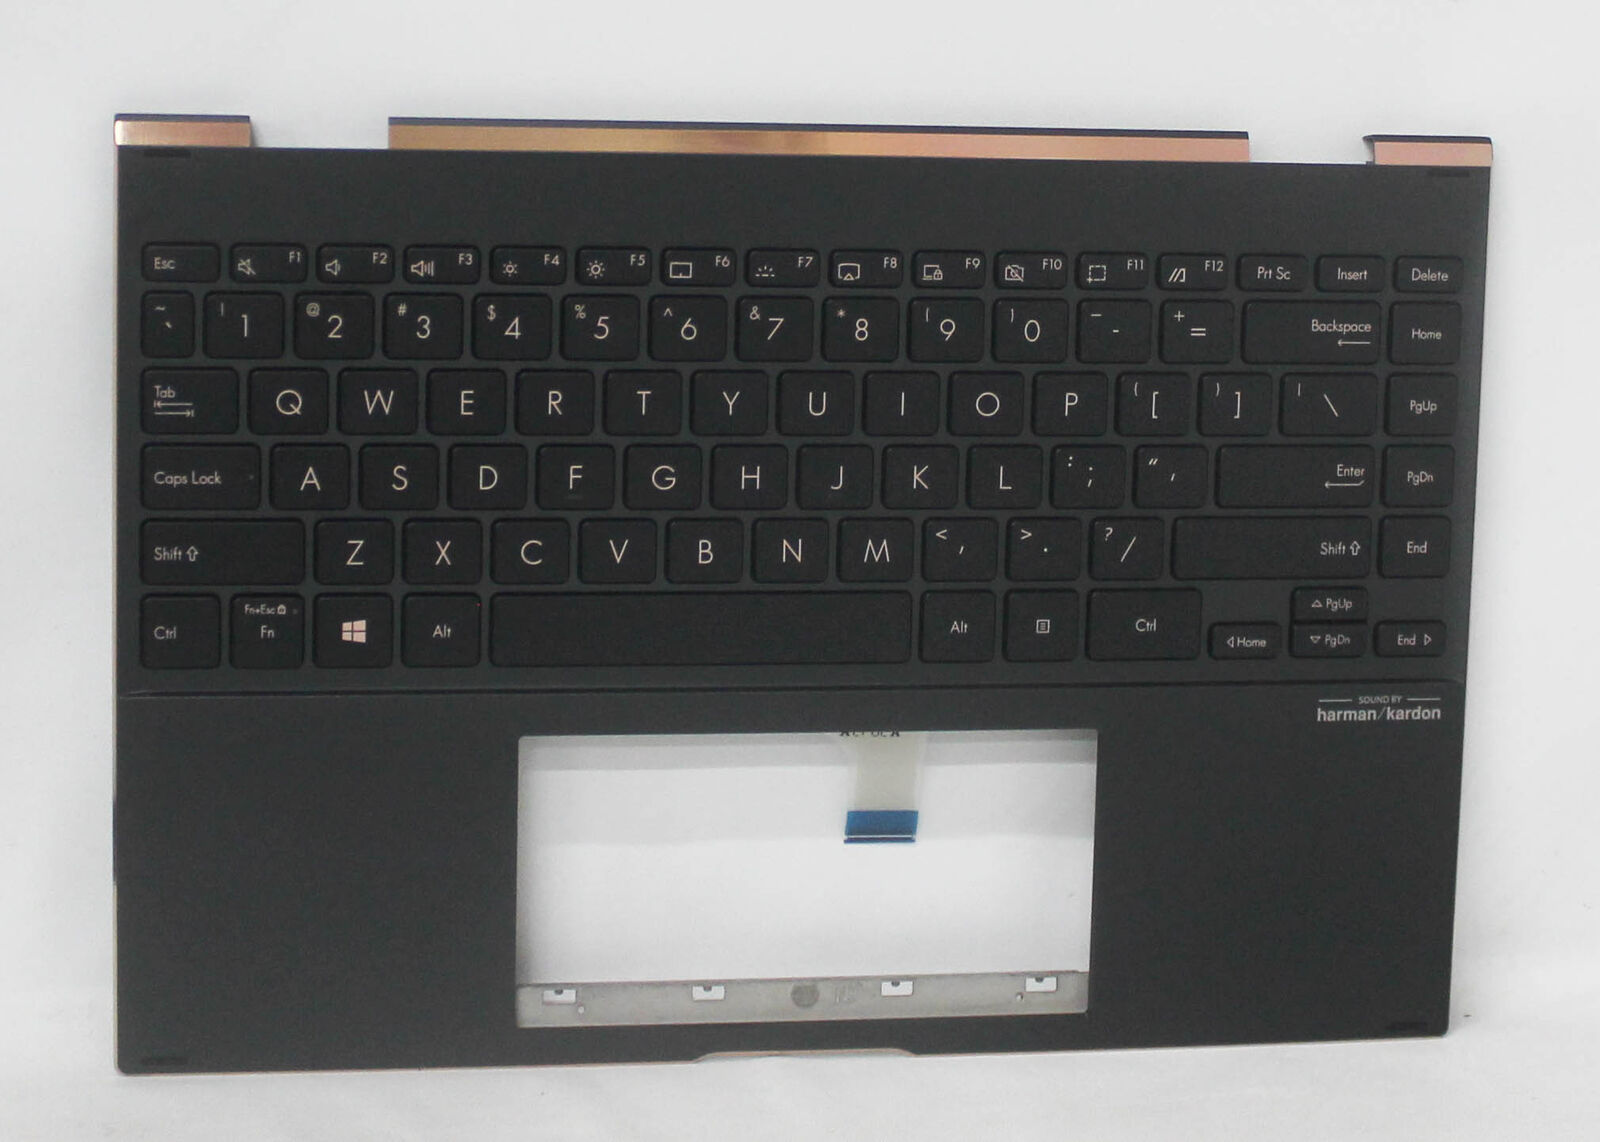 90NB0RZ2-R30US0-B Asus Palmrest Top Covre W/Keyboard (Us-English) As